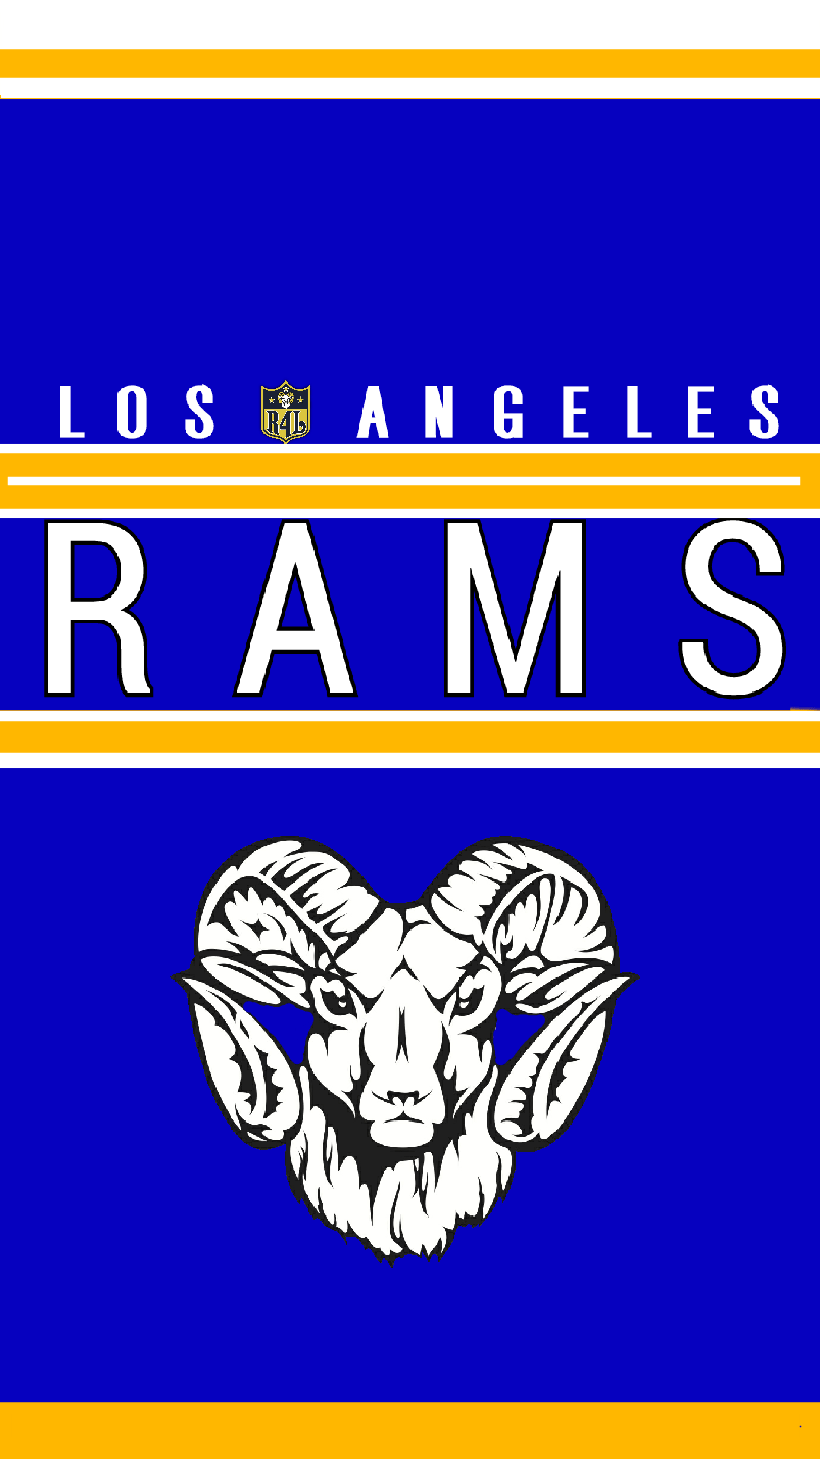 La Rams Wallpaper Larams4life